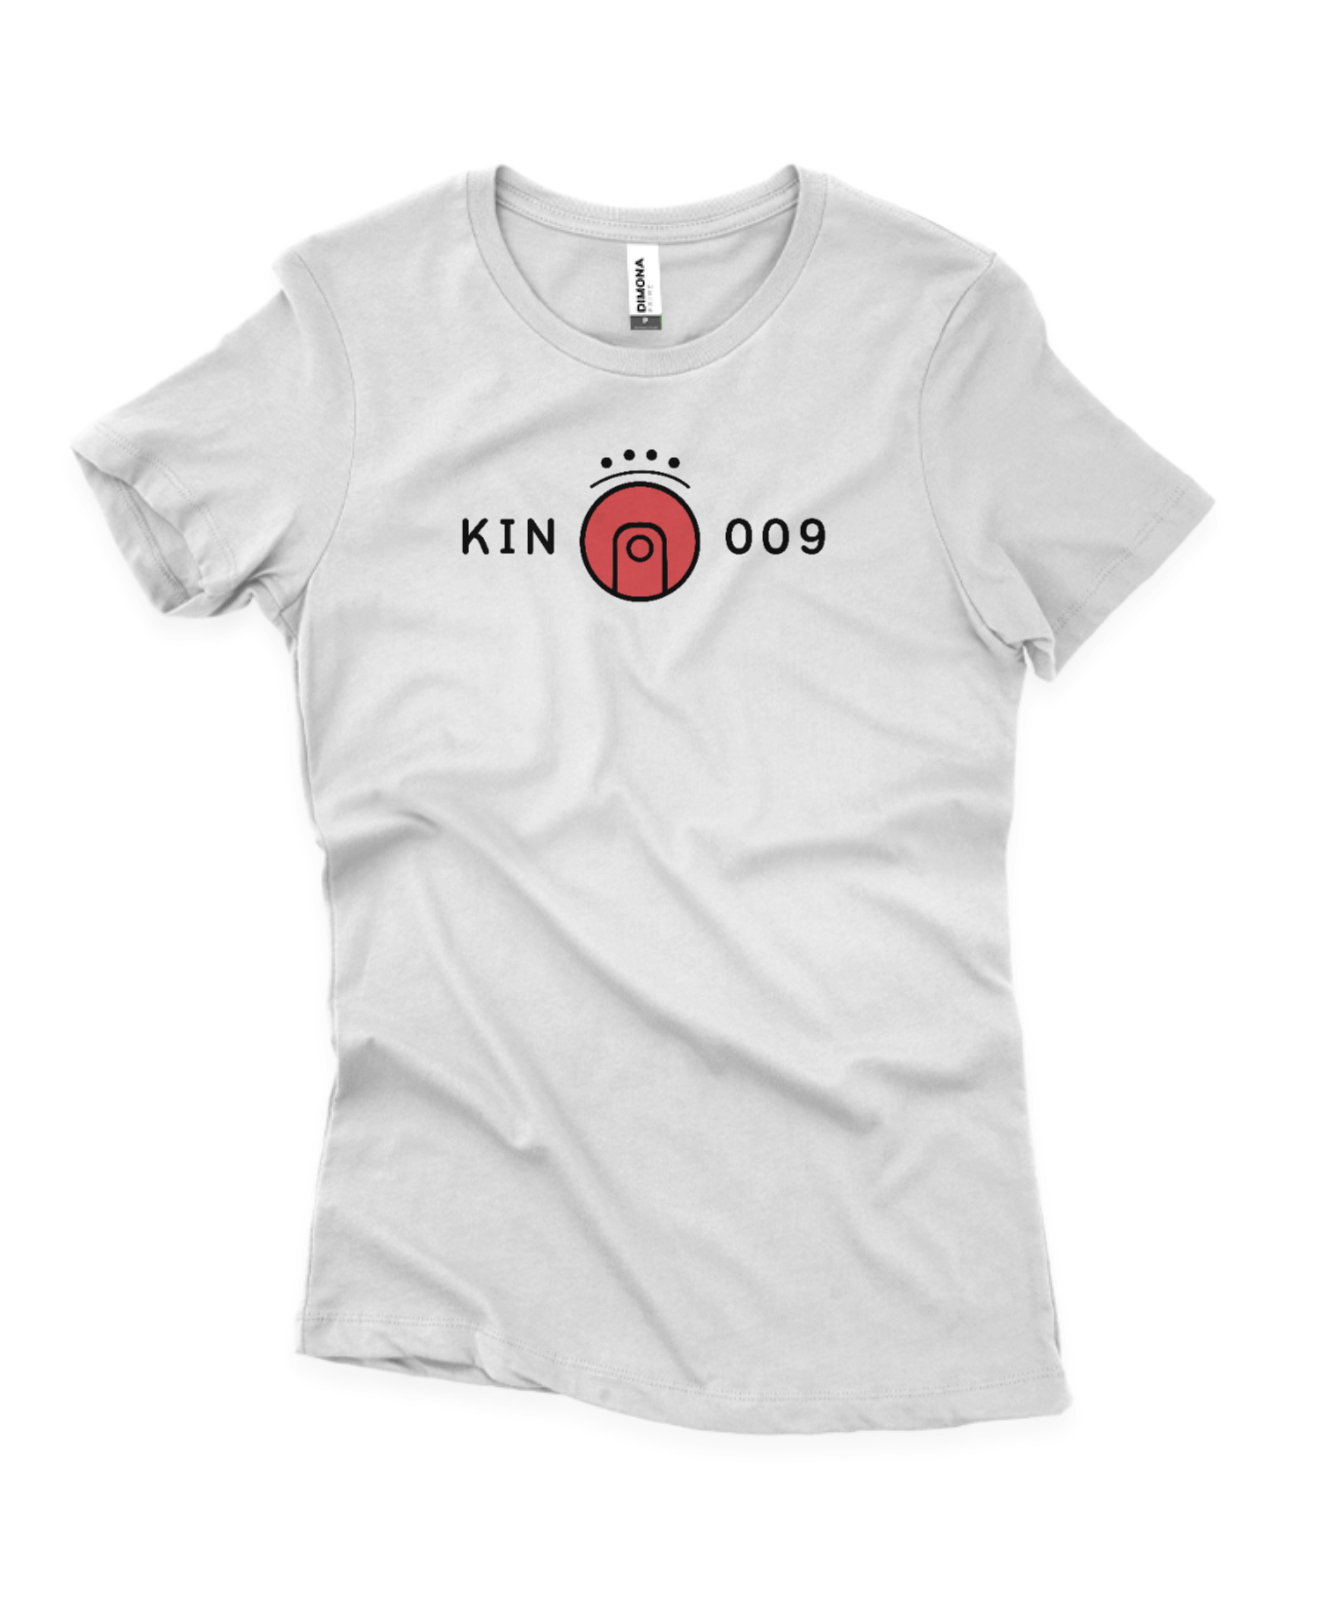 Mockup Camisa Branca - Camisa Feminina Kin 009 - Lua Solar Vermelha - Kin 09 - Kin 9